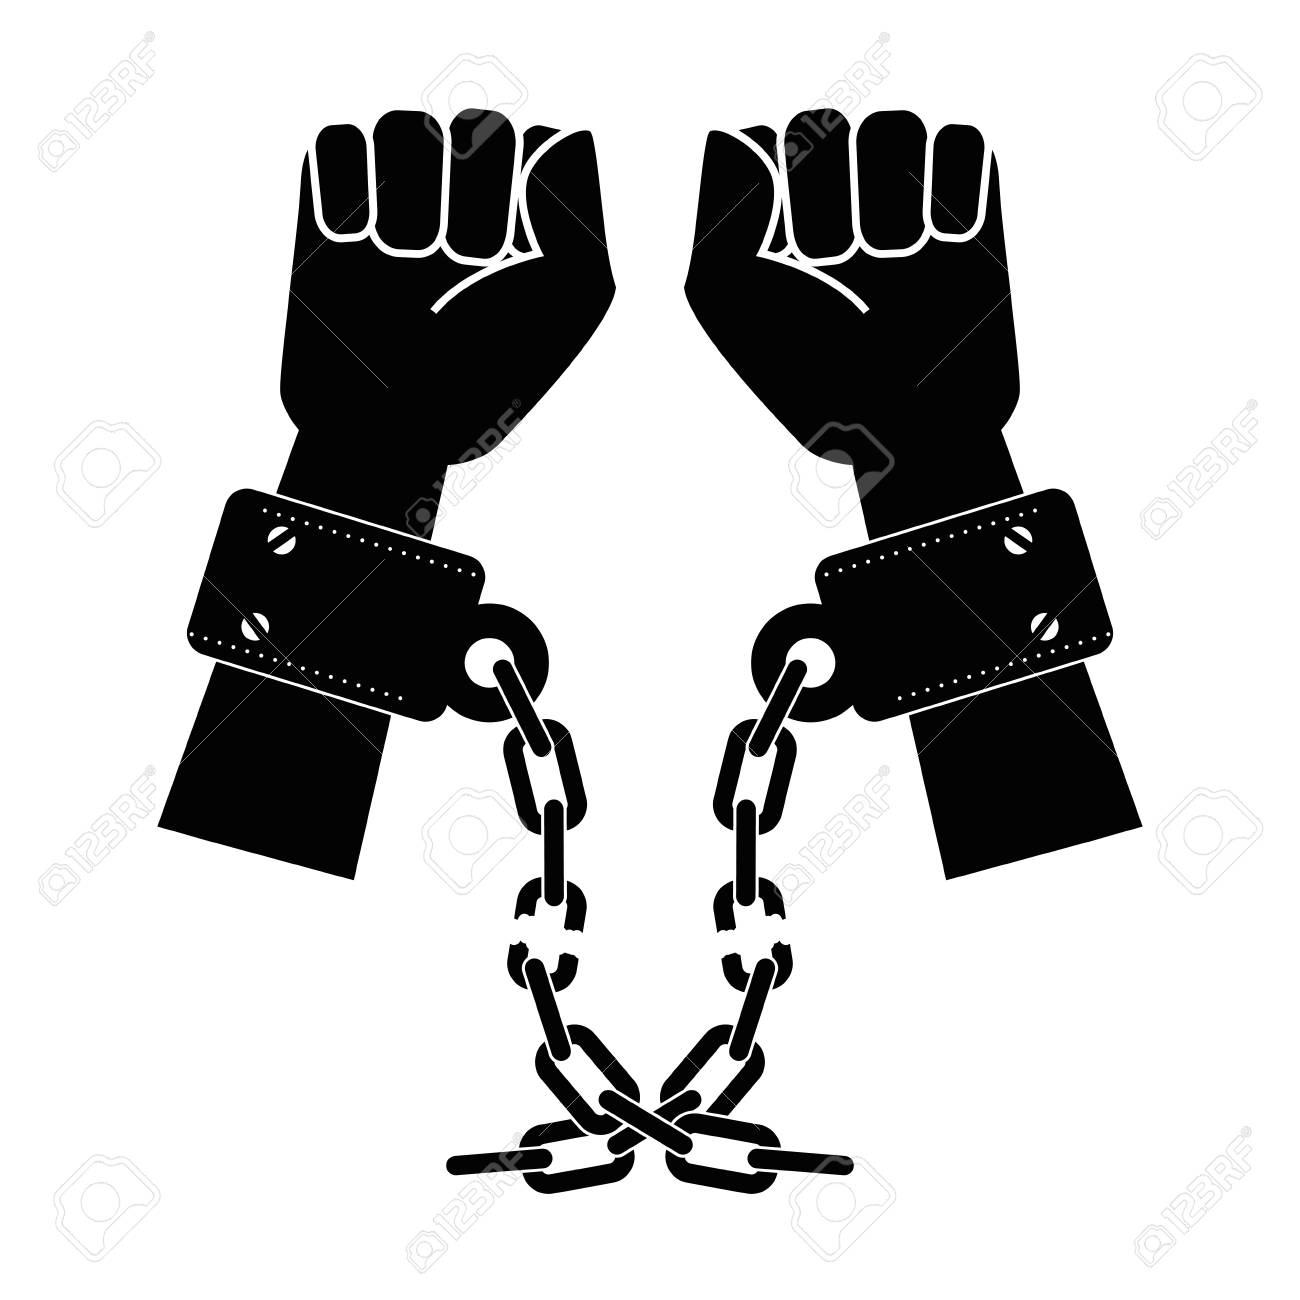 82072469-chain-of-slavery-icon-vector-illustration-graphic-design.jpg